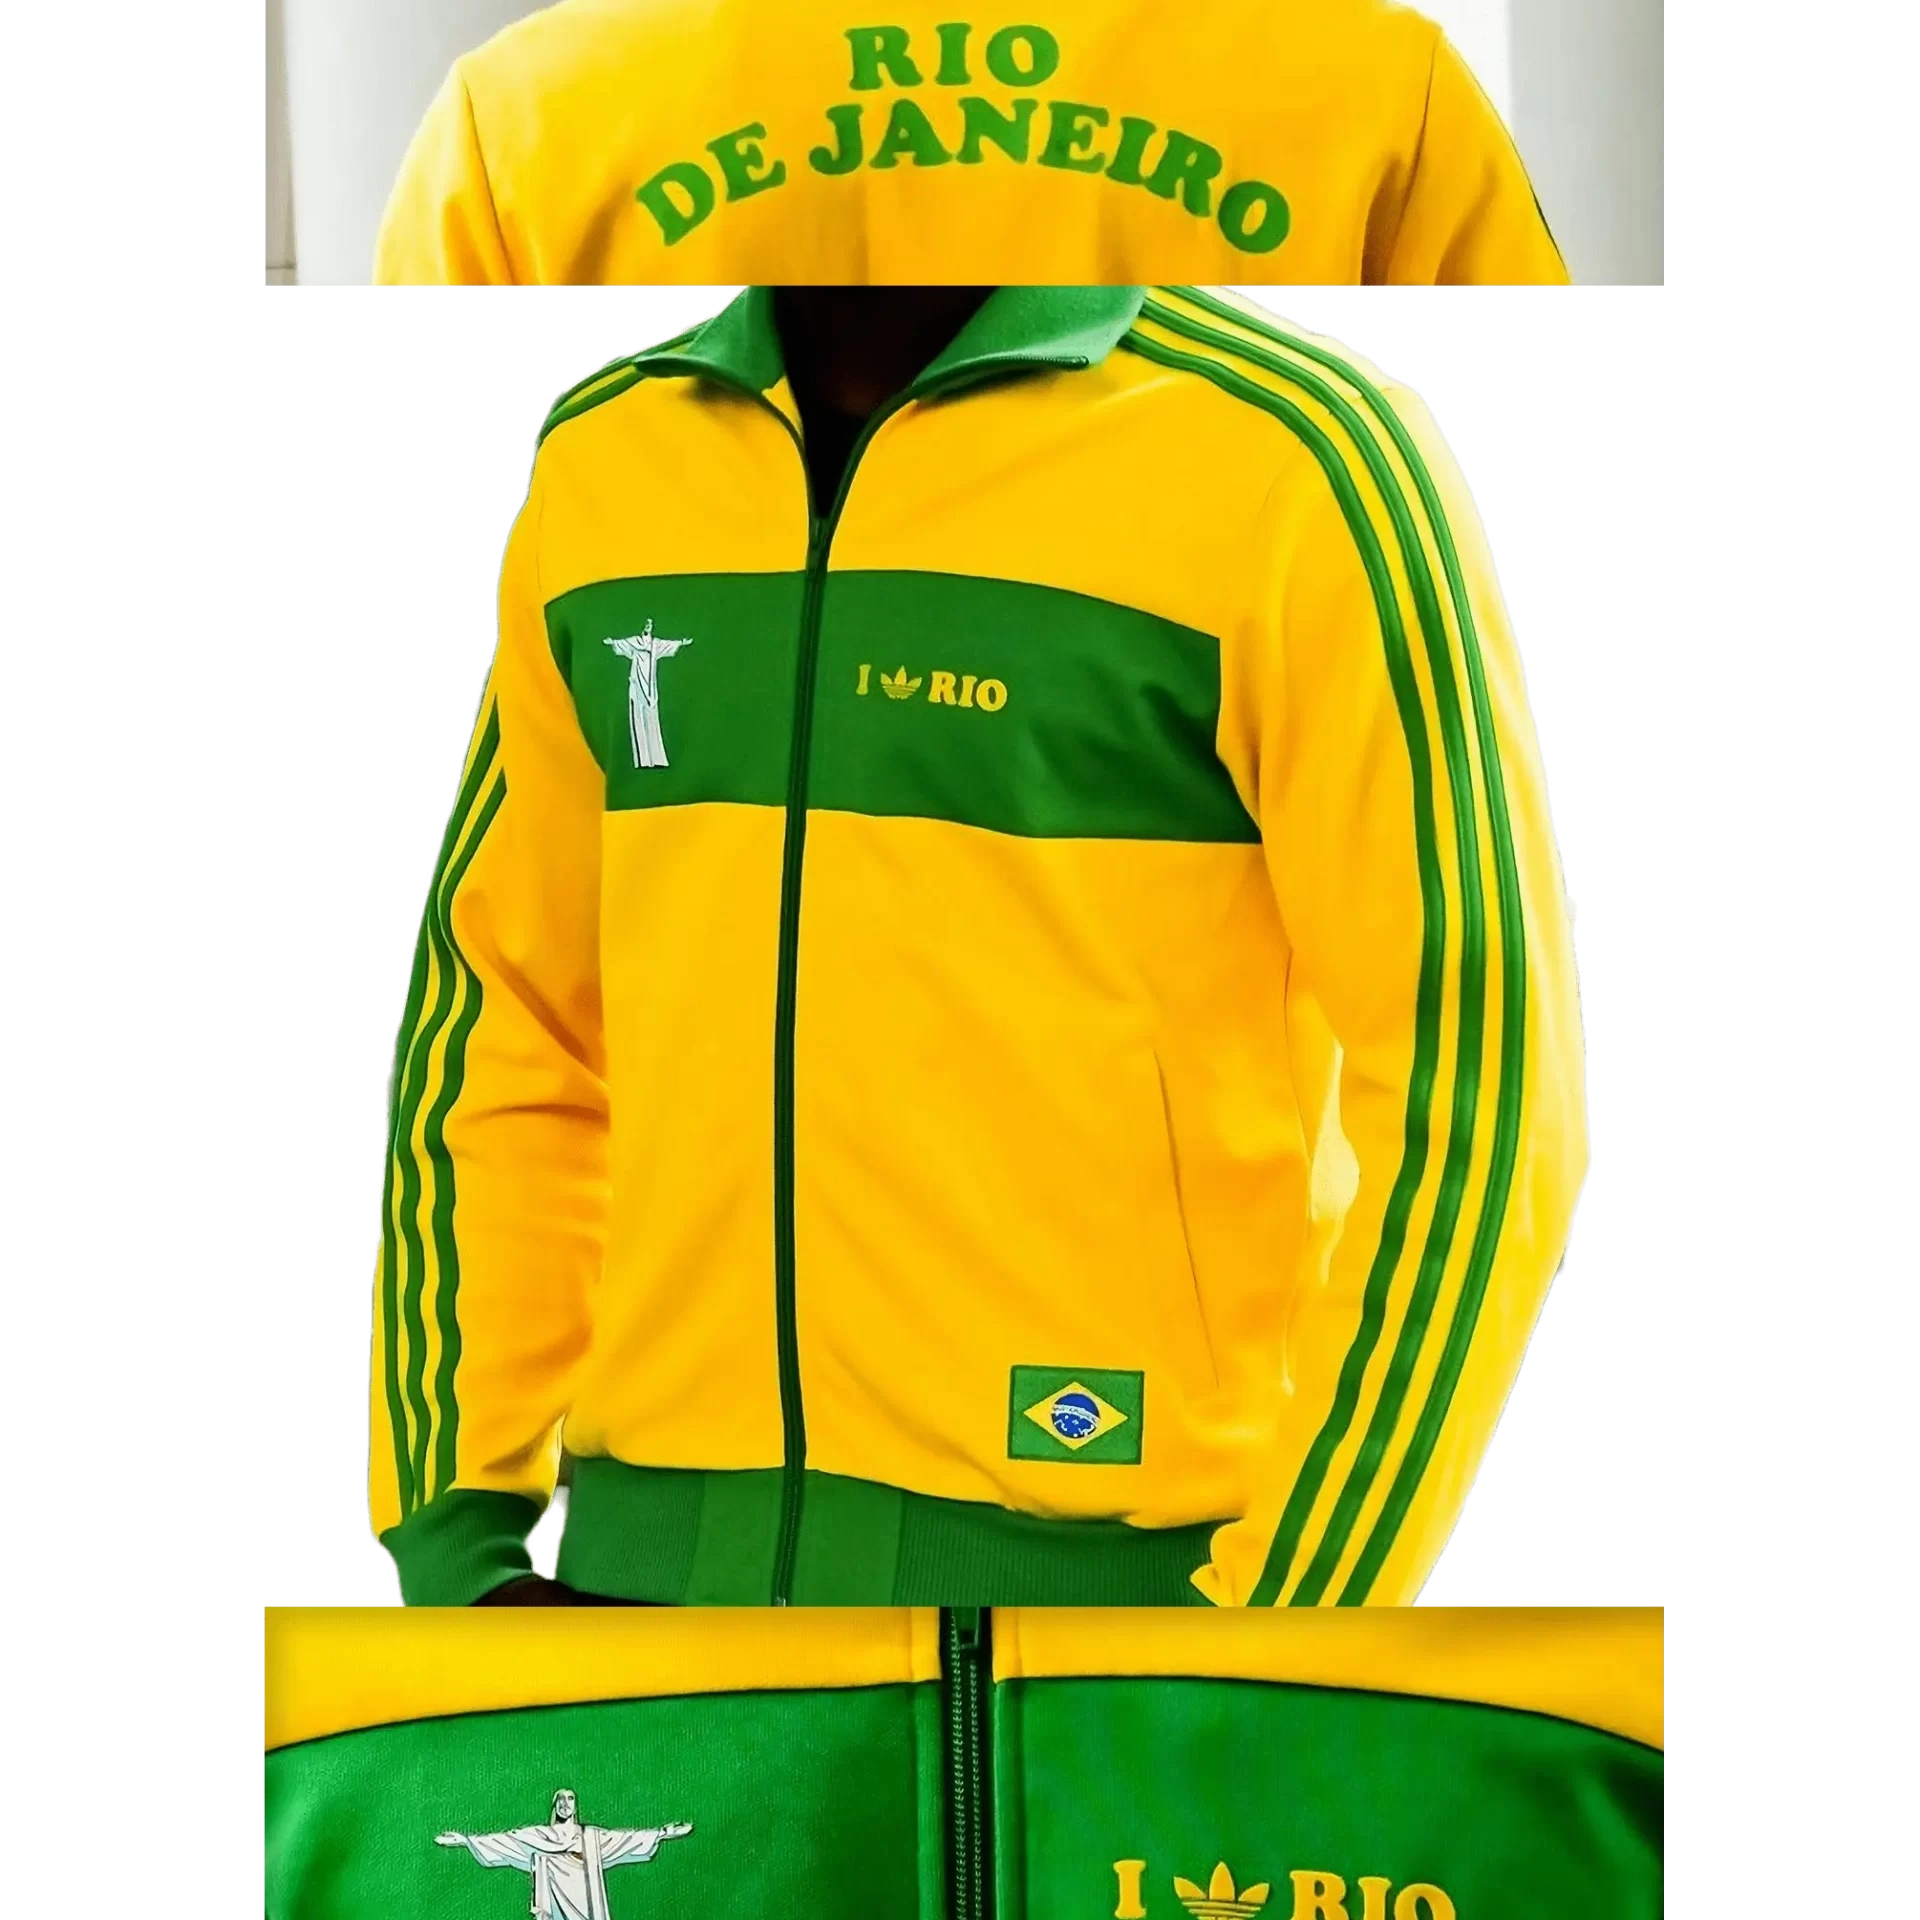 Men's 2006 Rio de Janeiro TT-Two by Adidas Originals: Tremendous (EnLawded.com file #lmchk47623ip2y122417kg9st)